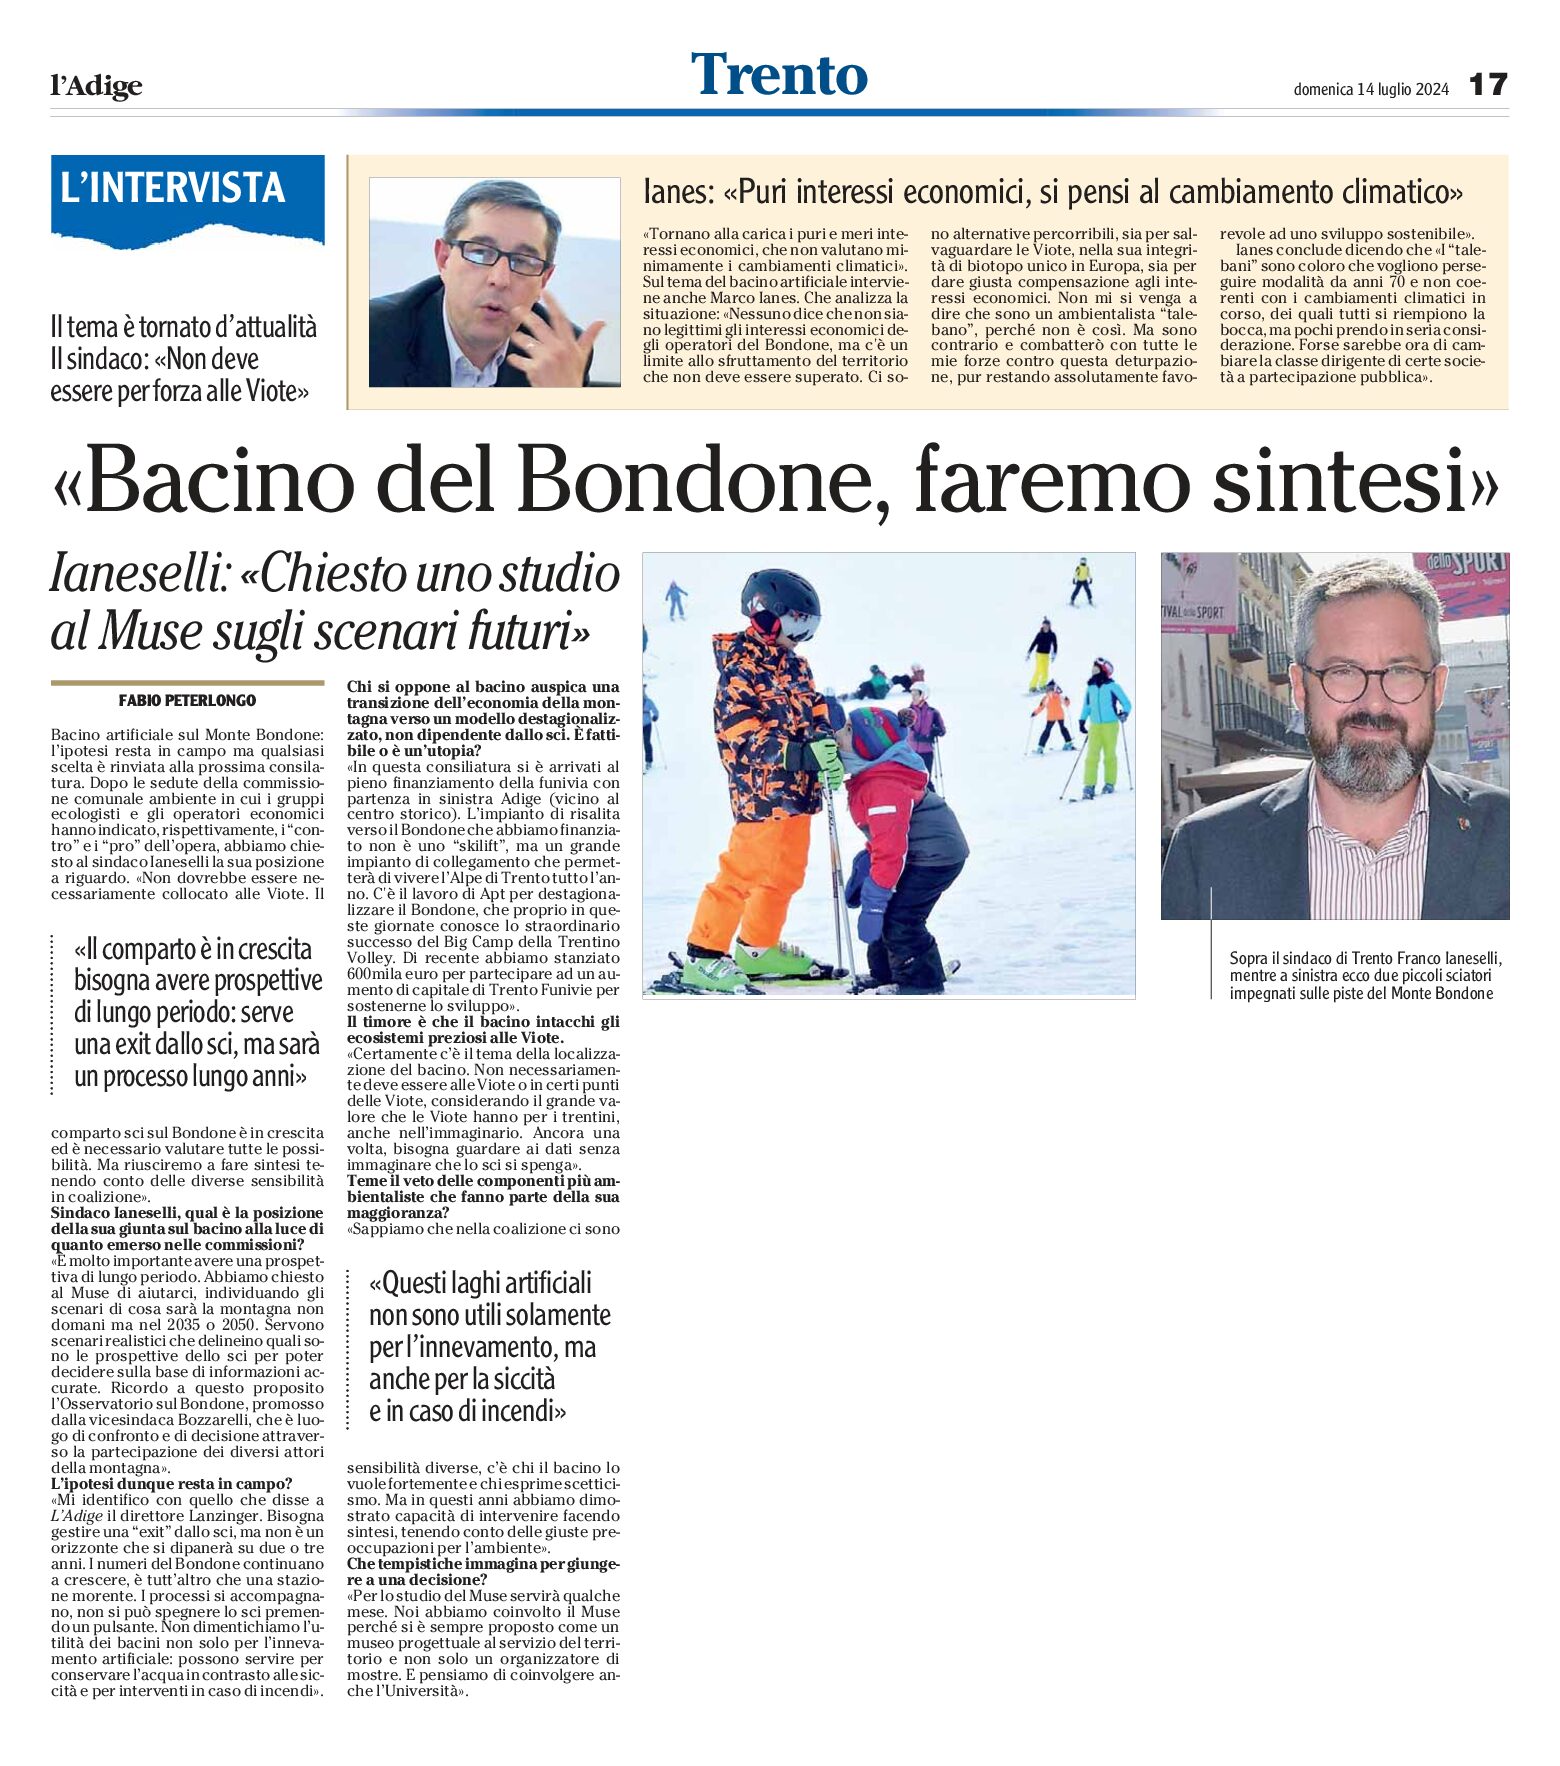 Intervista al sindaco Ianeselli: bacino del Bondone, faremo sintesi